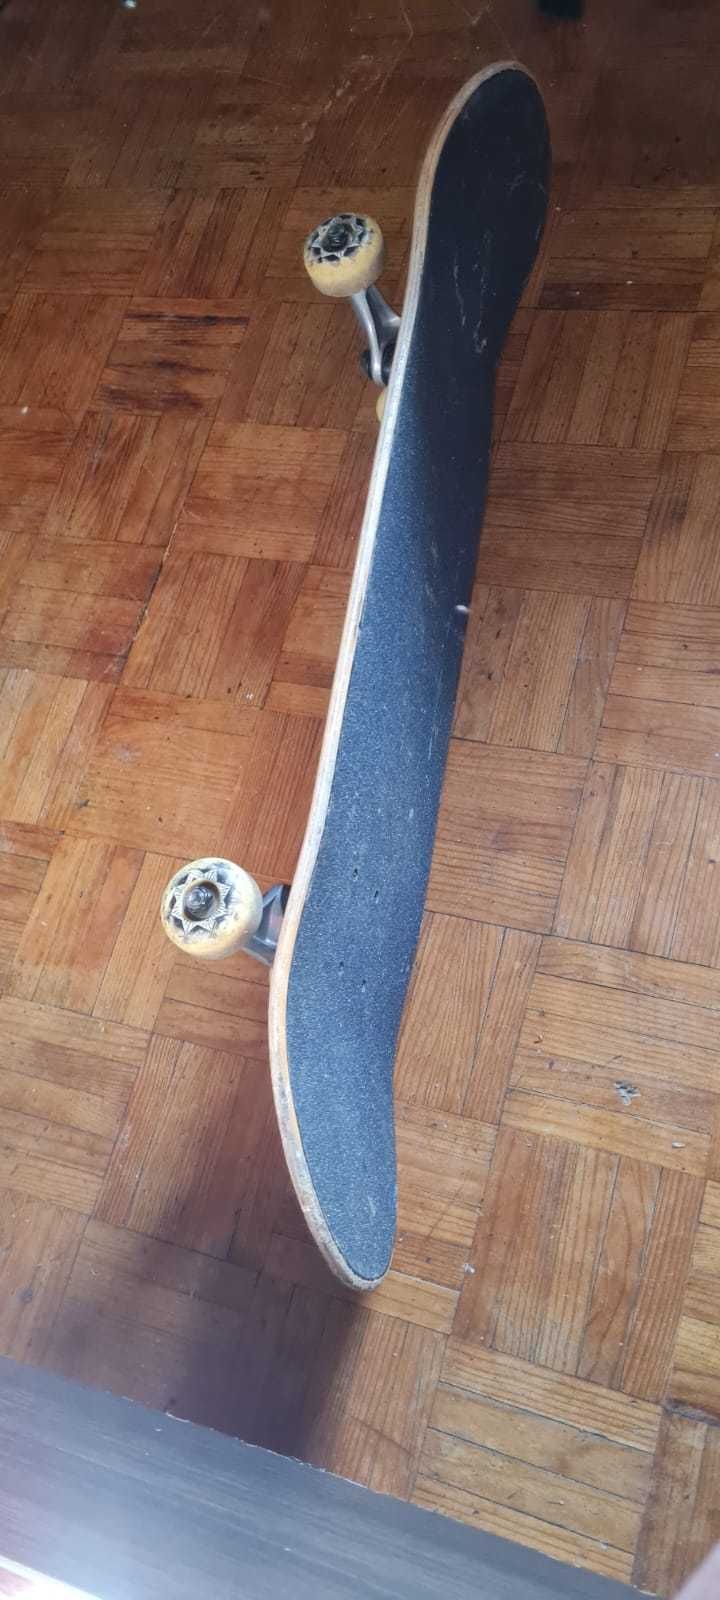 Prancha Skate usada